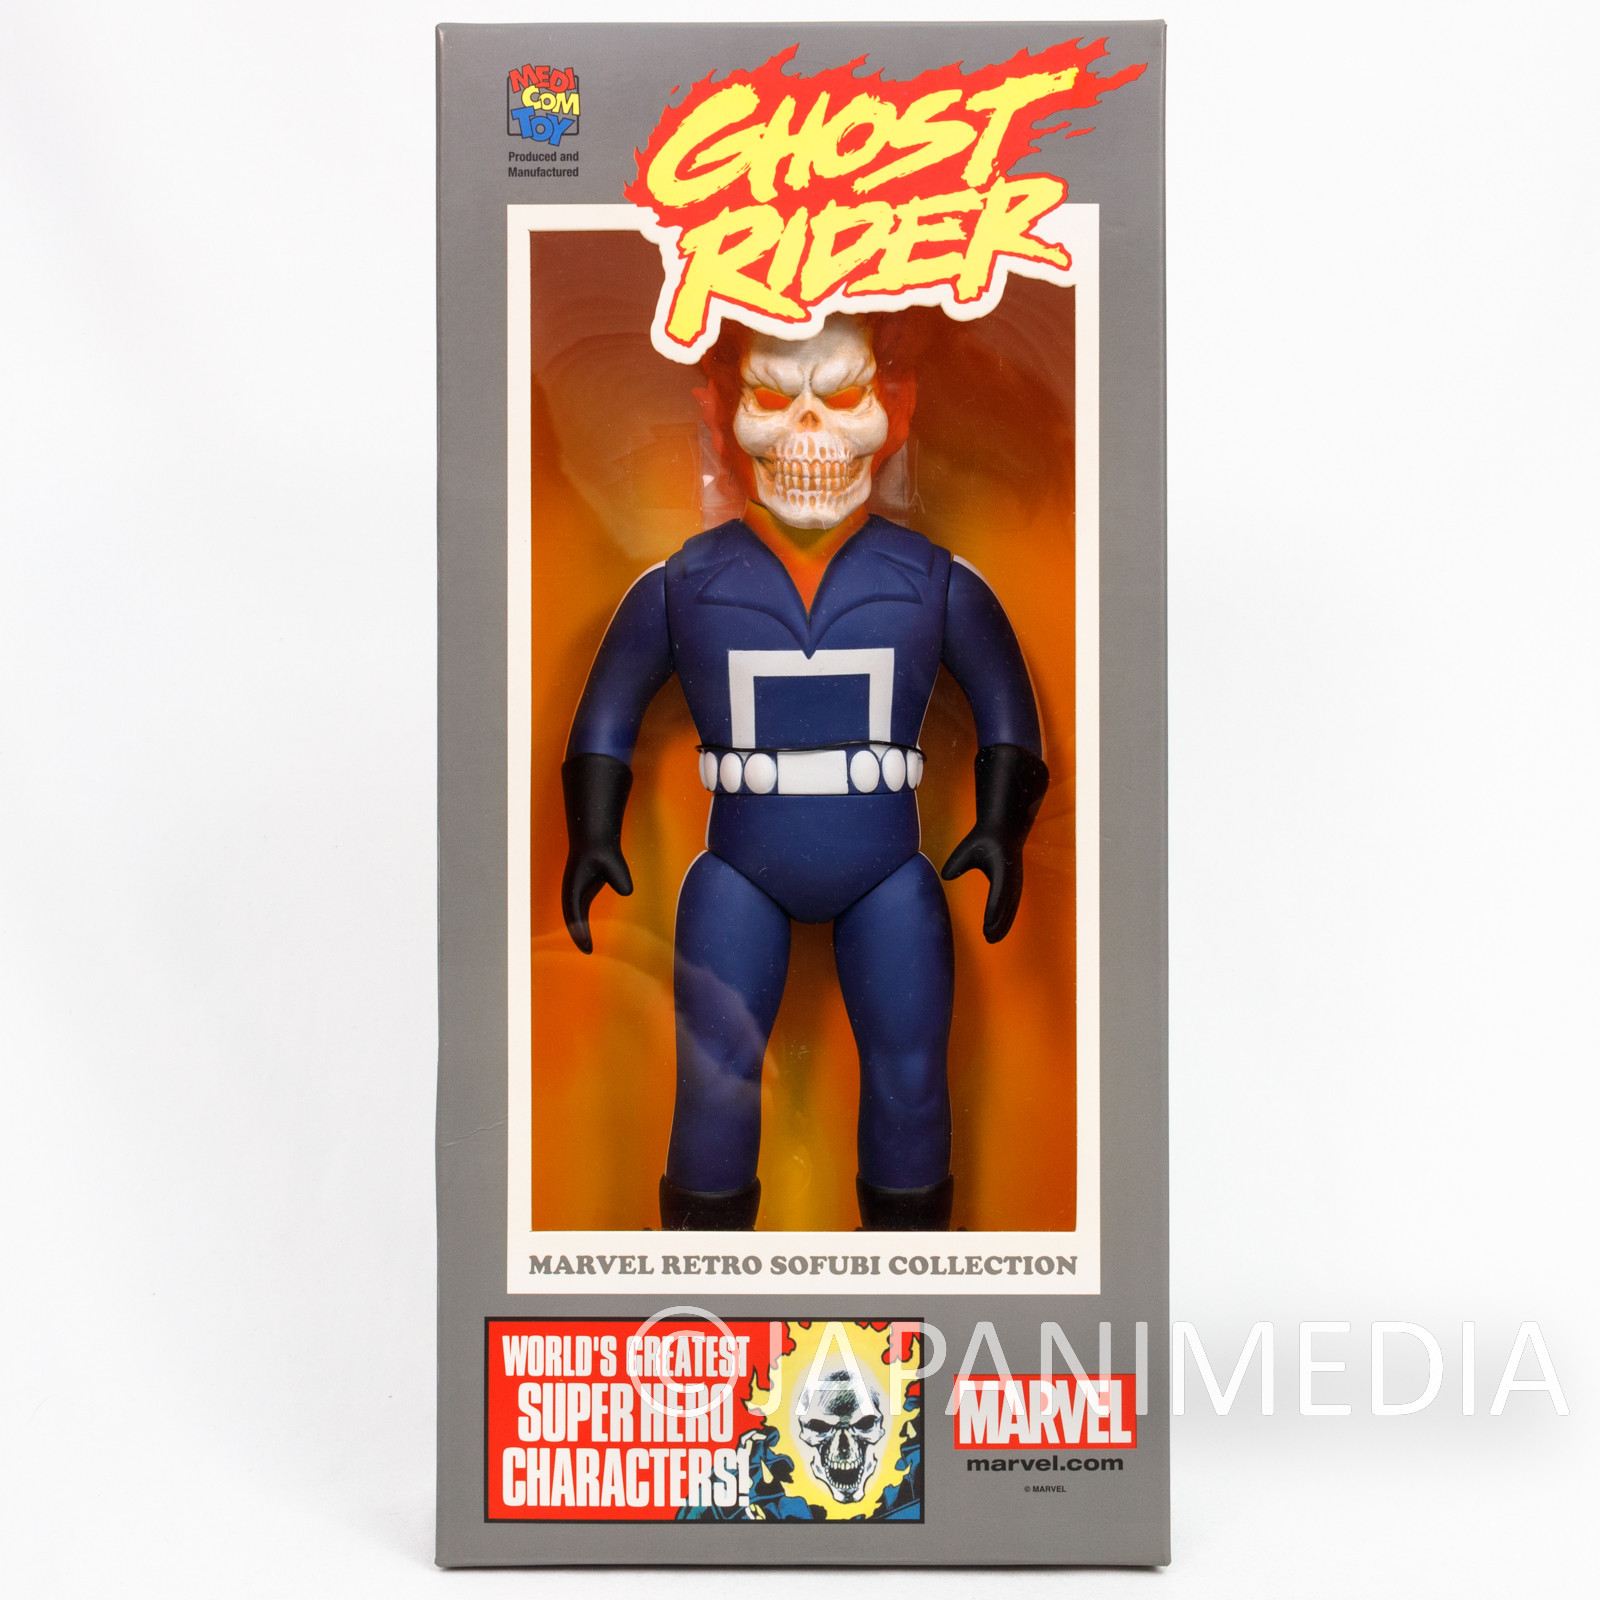 RARE! Ghost Rider Soft Vinyl Figure 10" Medicom Toy / Marvel Retro Sofubi